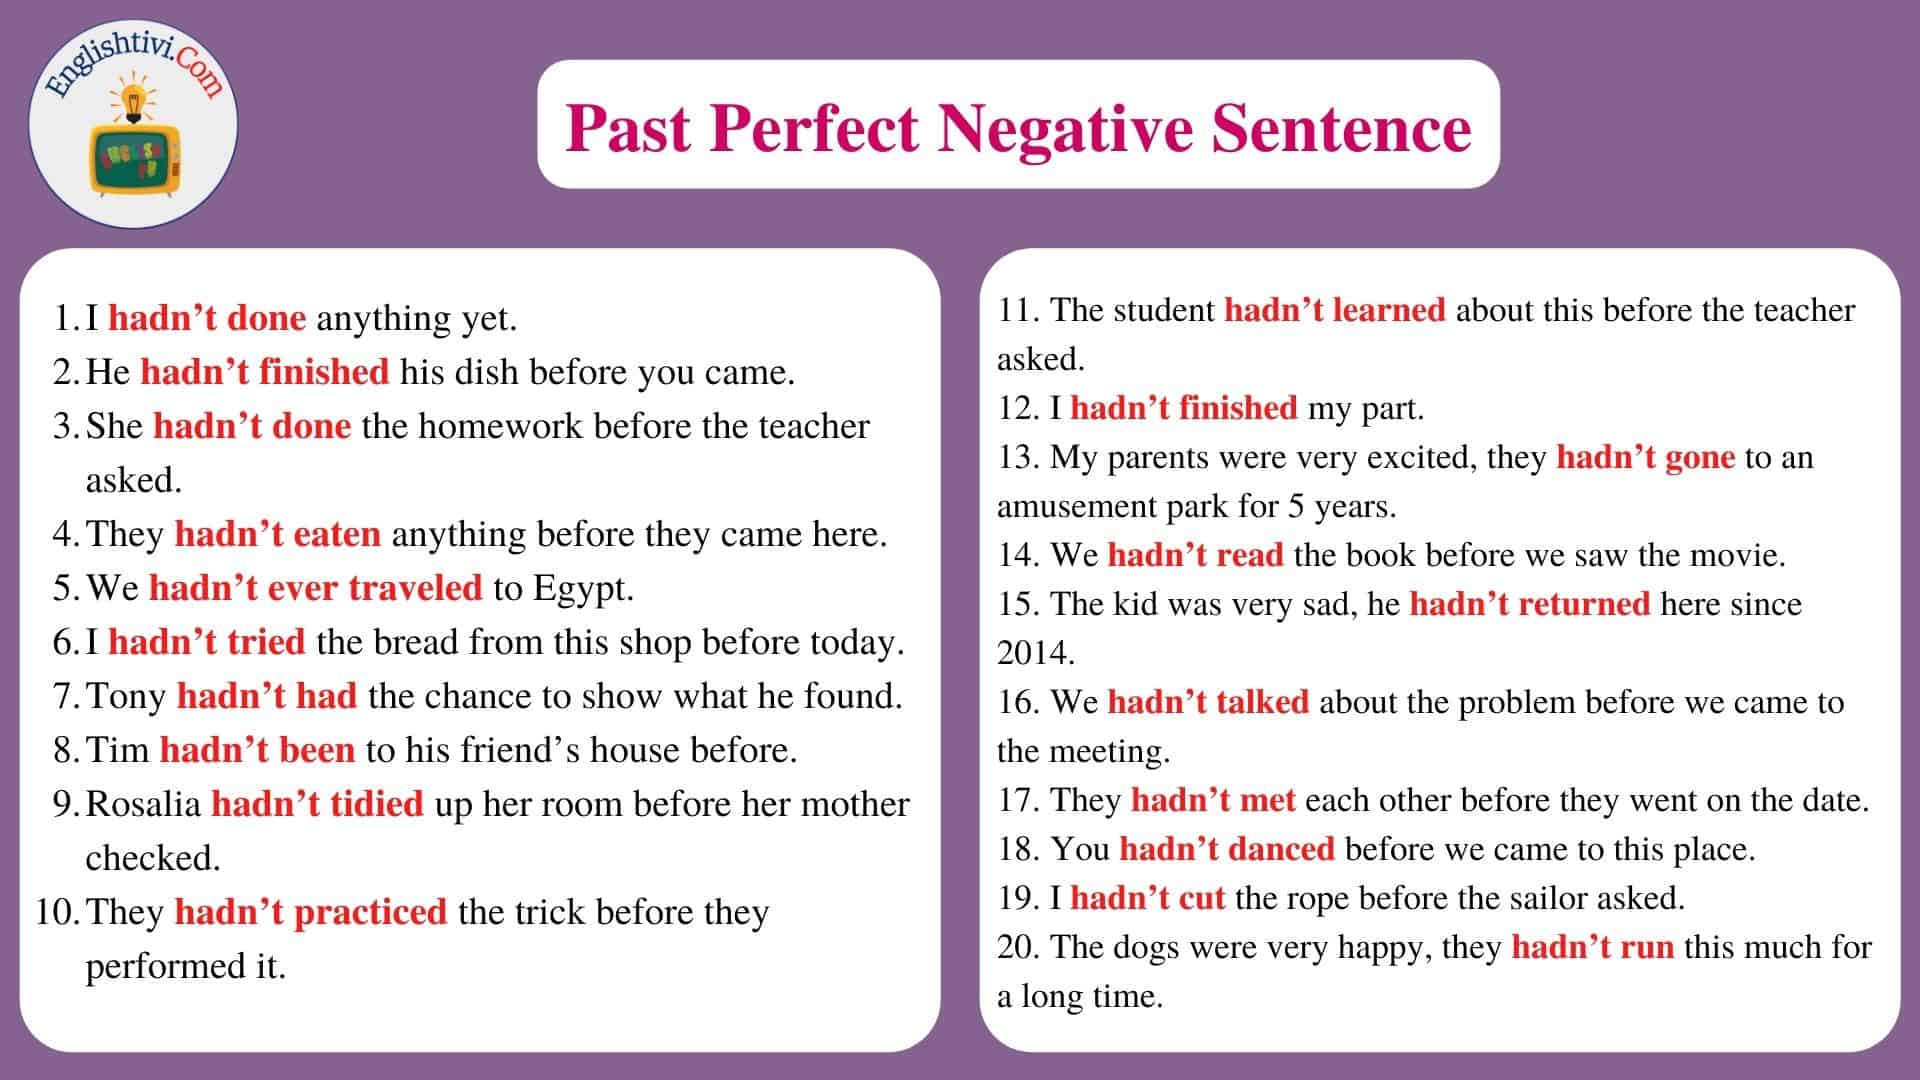 Past Perfect Negative Sentence